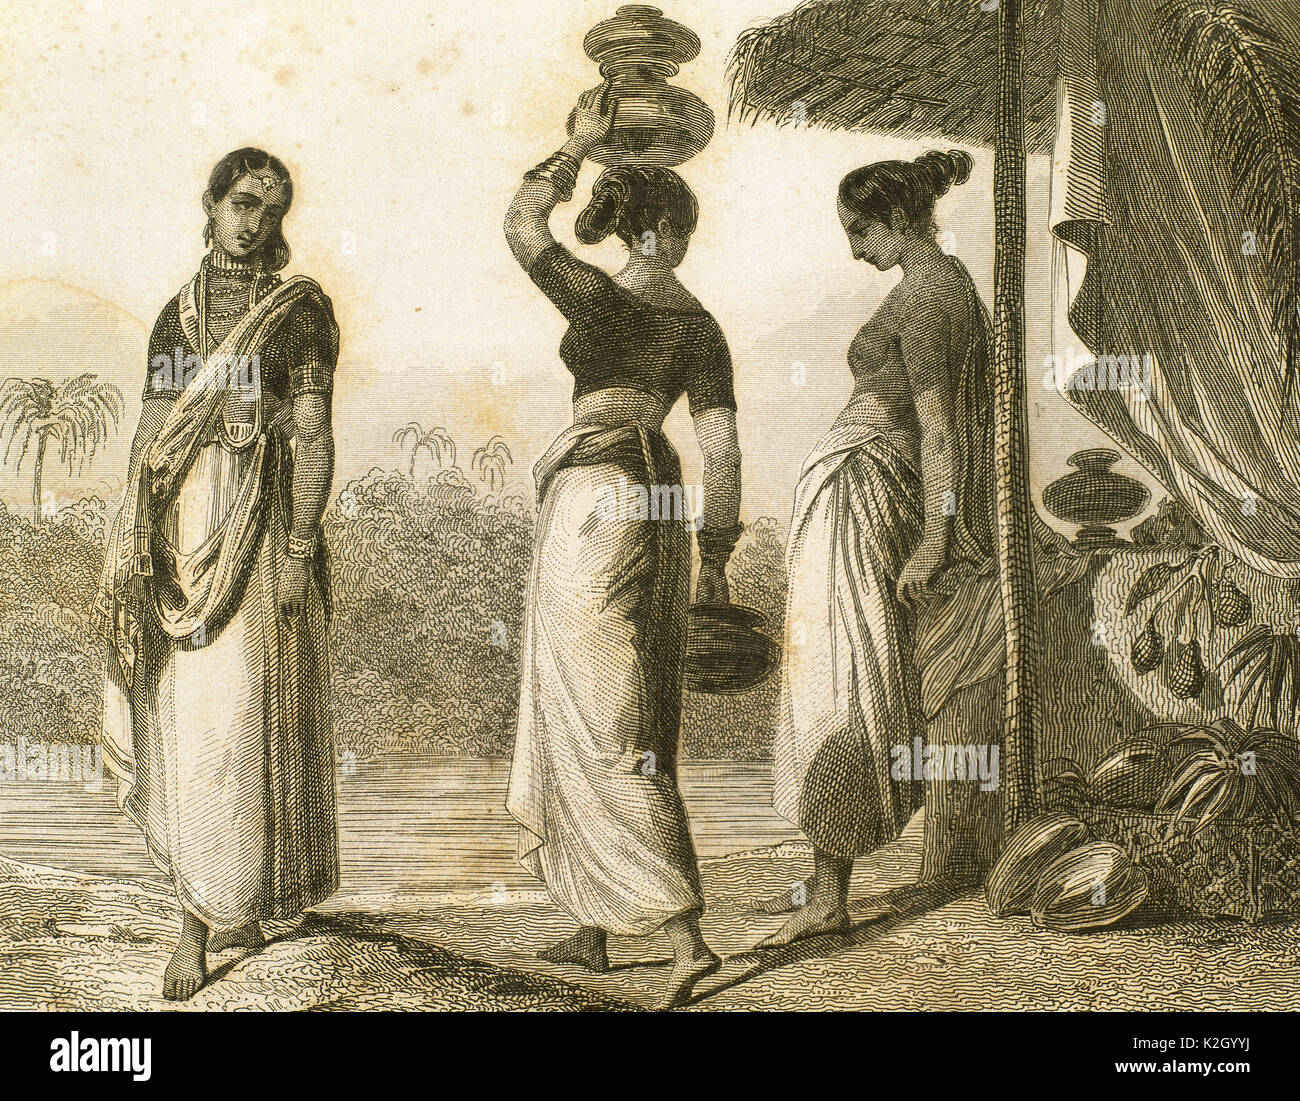 La India. Las mujeres pertenecientes a diferentes clases sociales. Lemaitre direxit. Grabado. Anónimo. 'Panorama Universal, India, 1845". Foto de stock